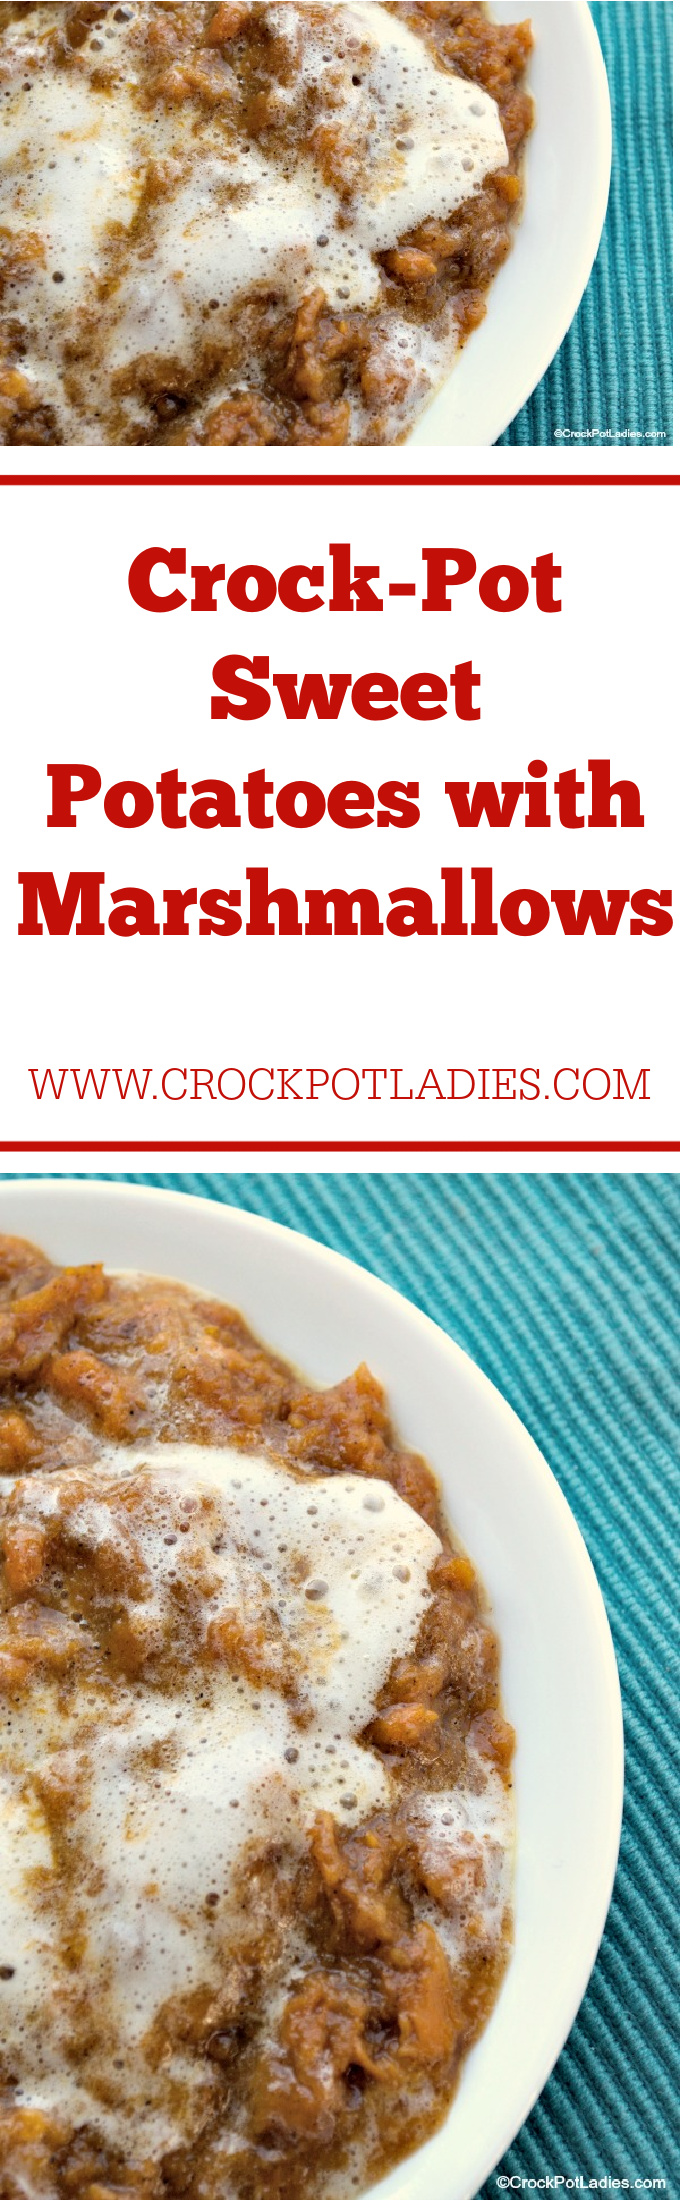 Crock-Pot Sweet Potatoes with Marshmallows